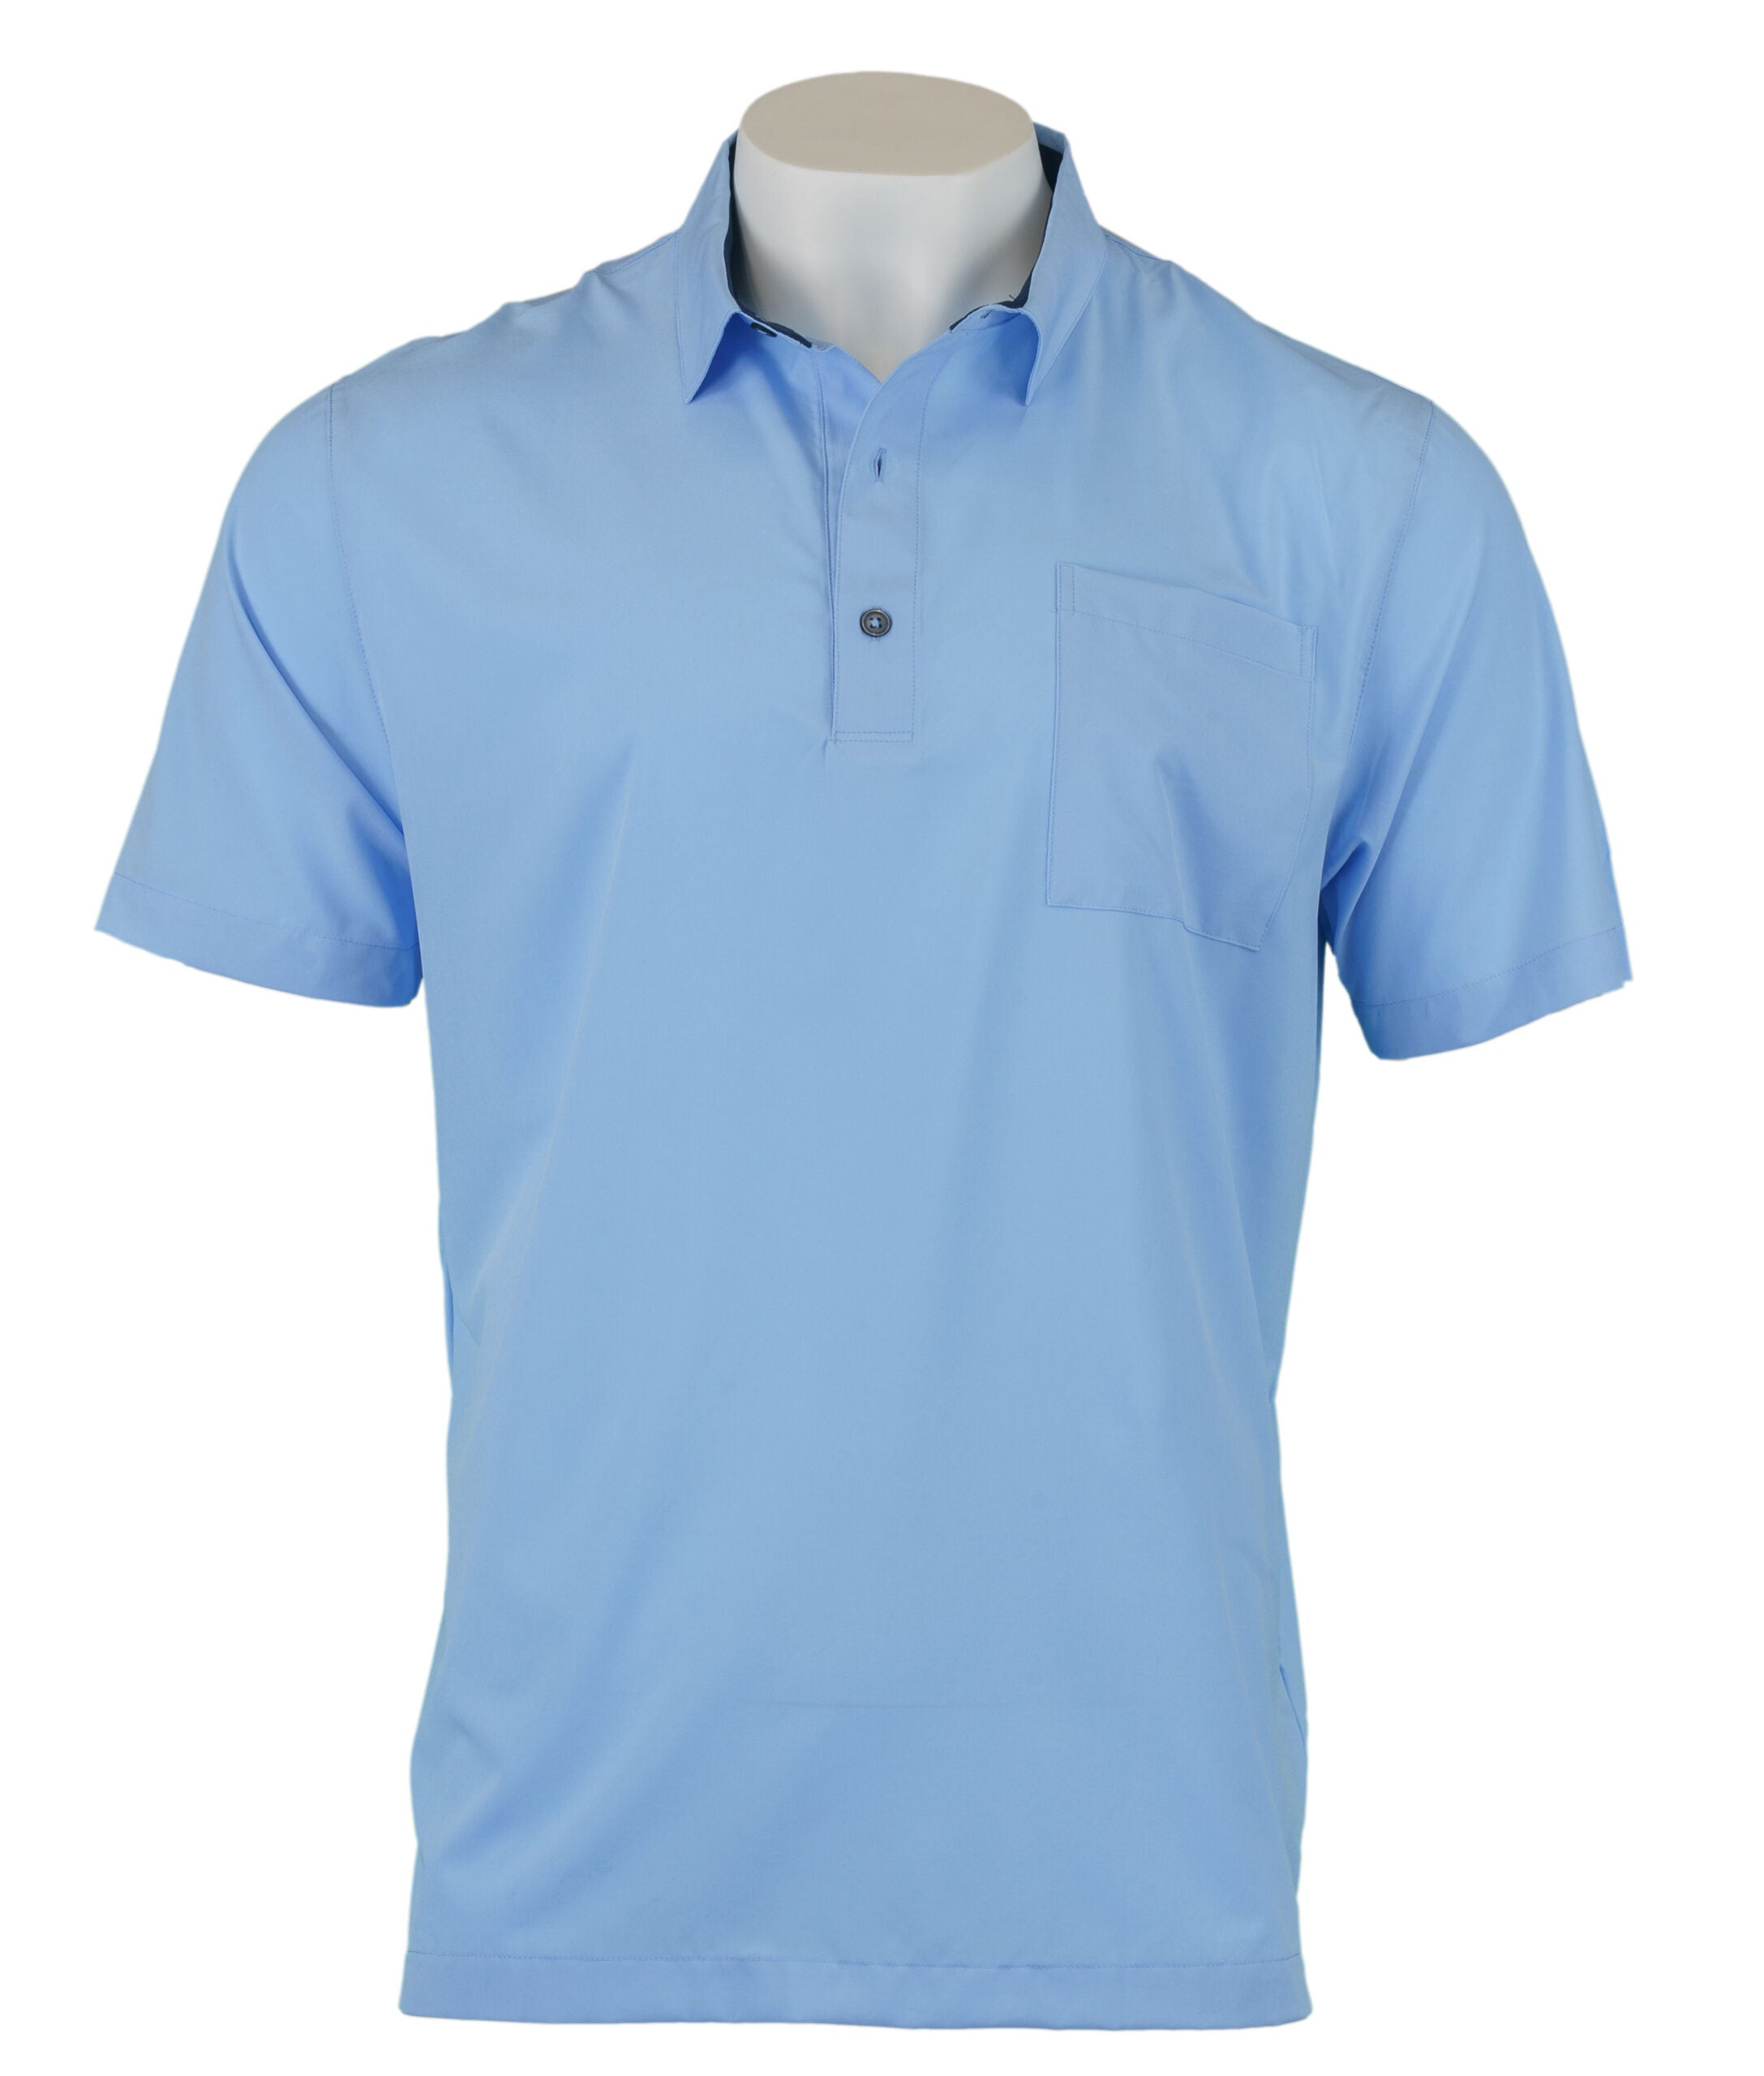 Jachs Men's Ultimate Comfort Shirt (Blue, Large)